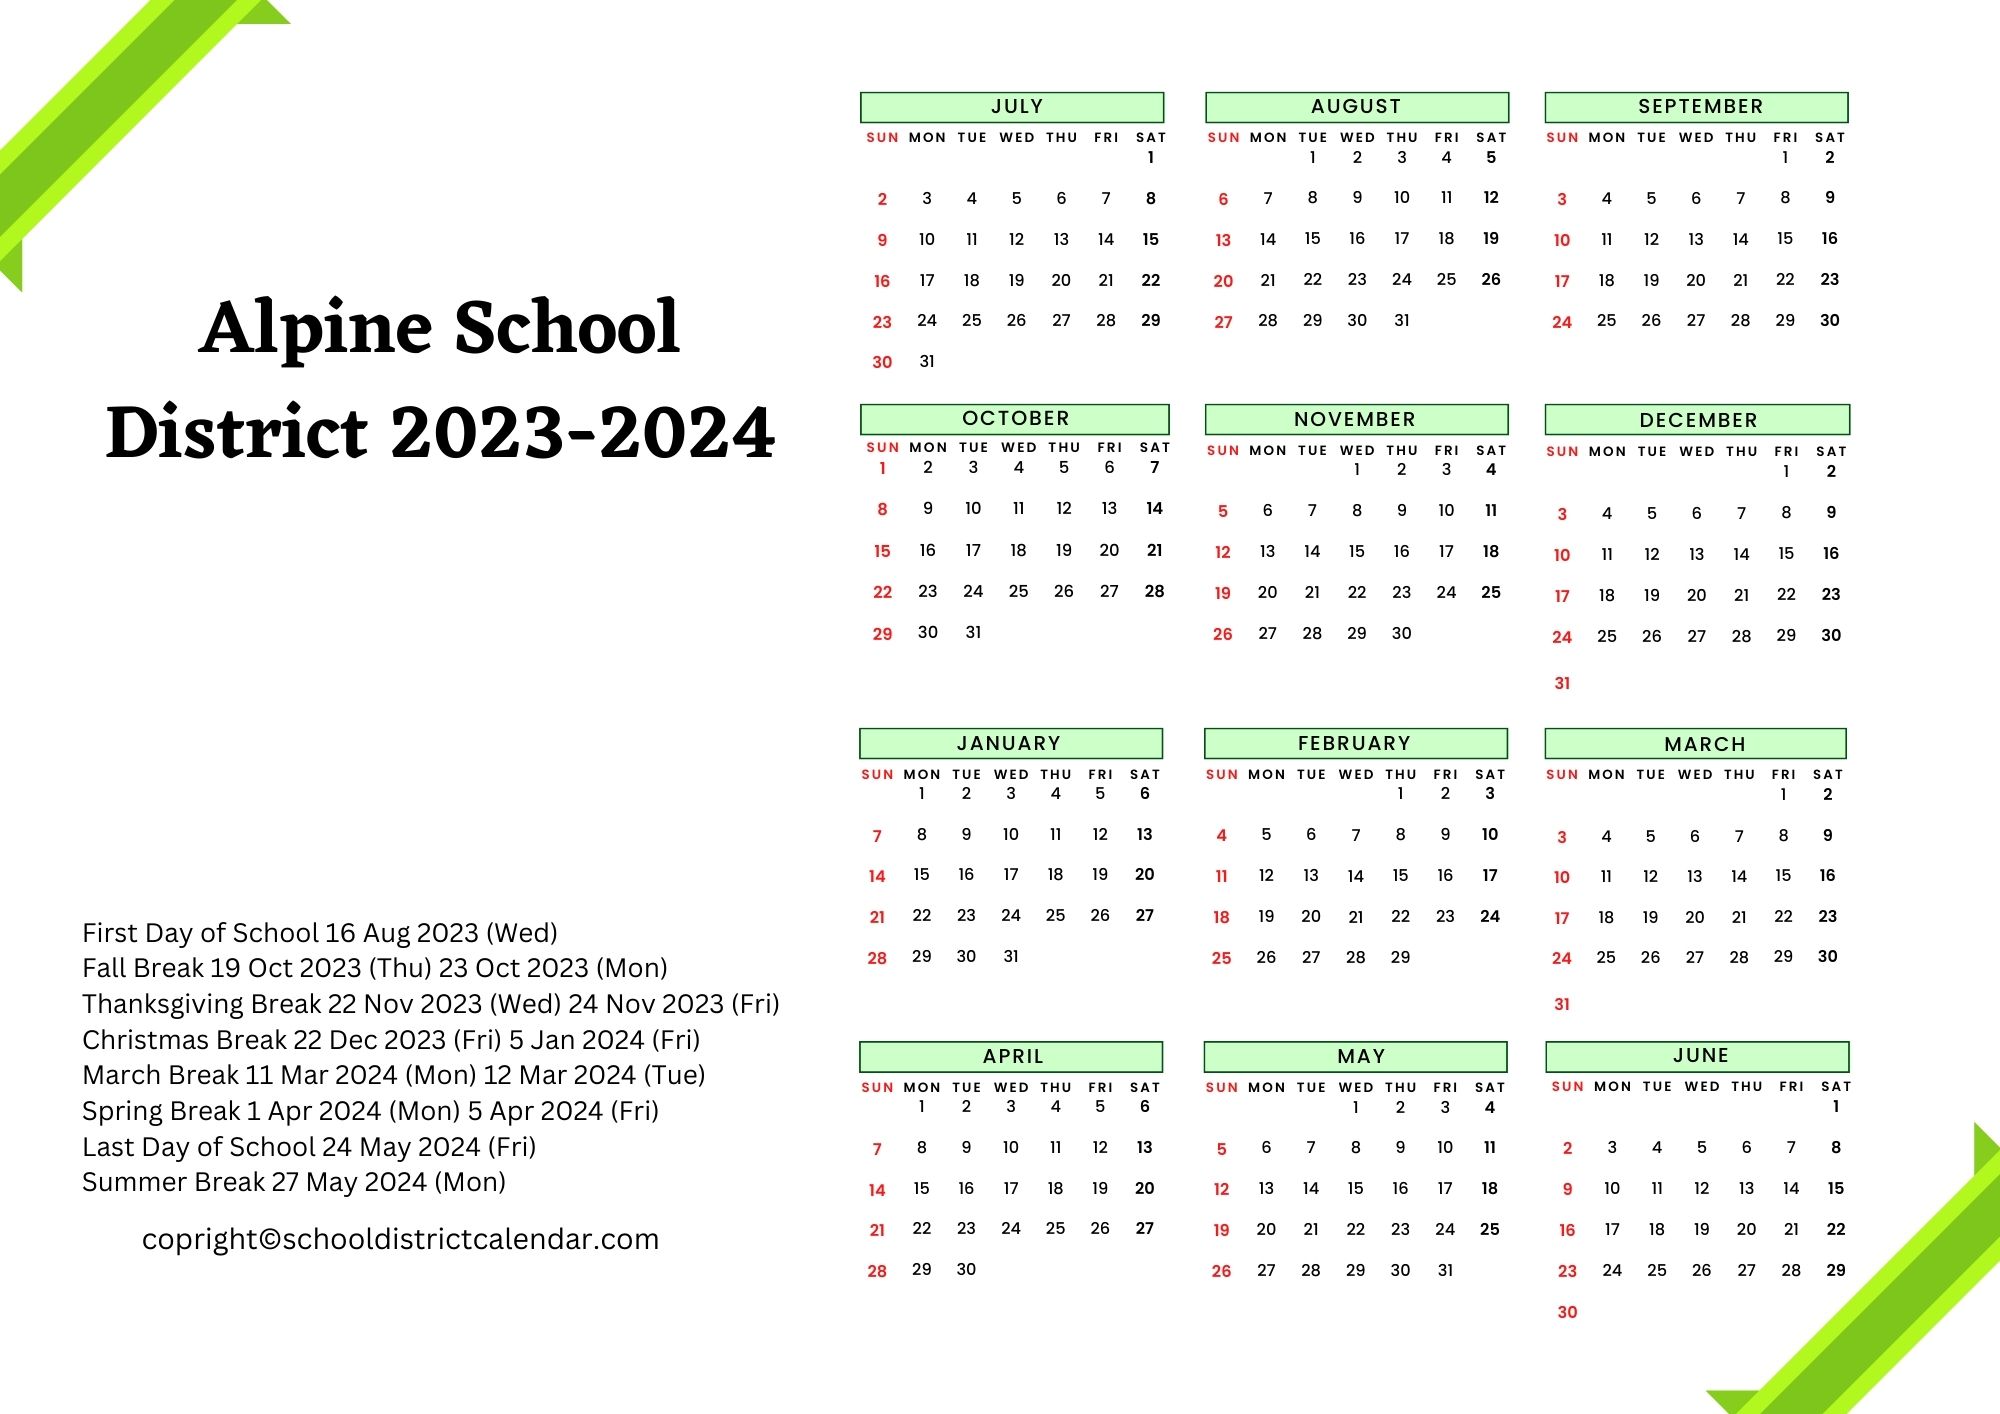 Alpine School District Calendar Holidays 20232024